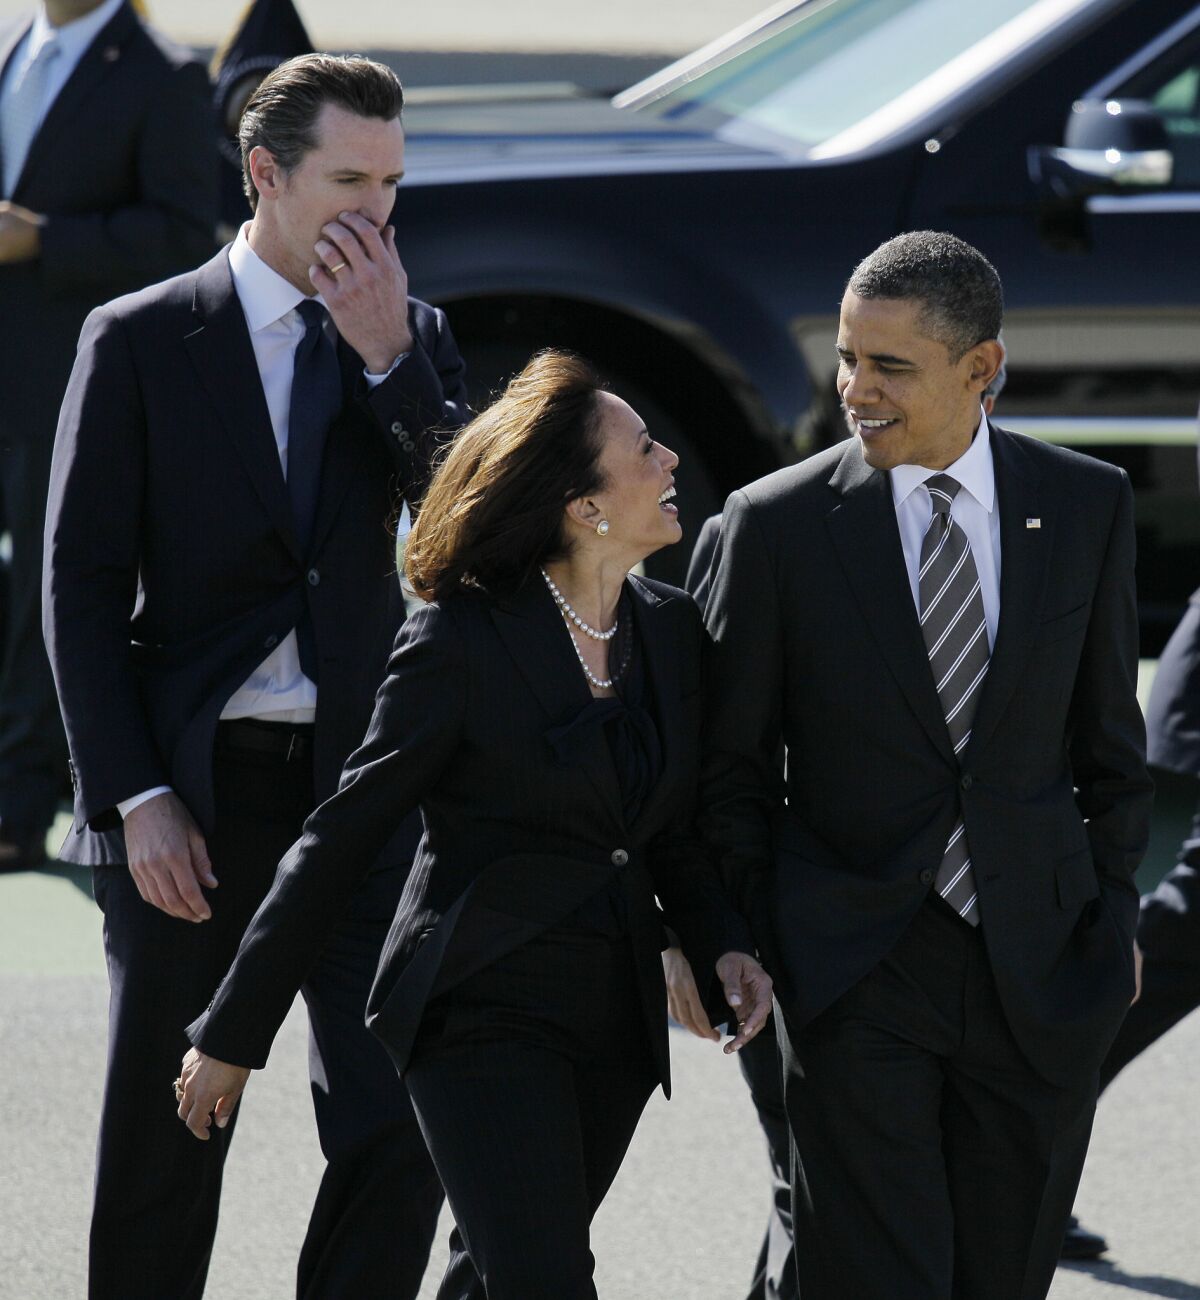 President Barack Obama walks with California Attorney General Kamala Harris, center, and California Lt. Gov. Gavin Newsom, after arriving at San Francisco International Airport in San Francisco in 2012.